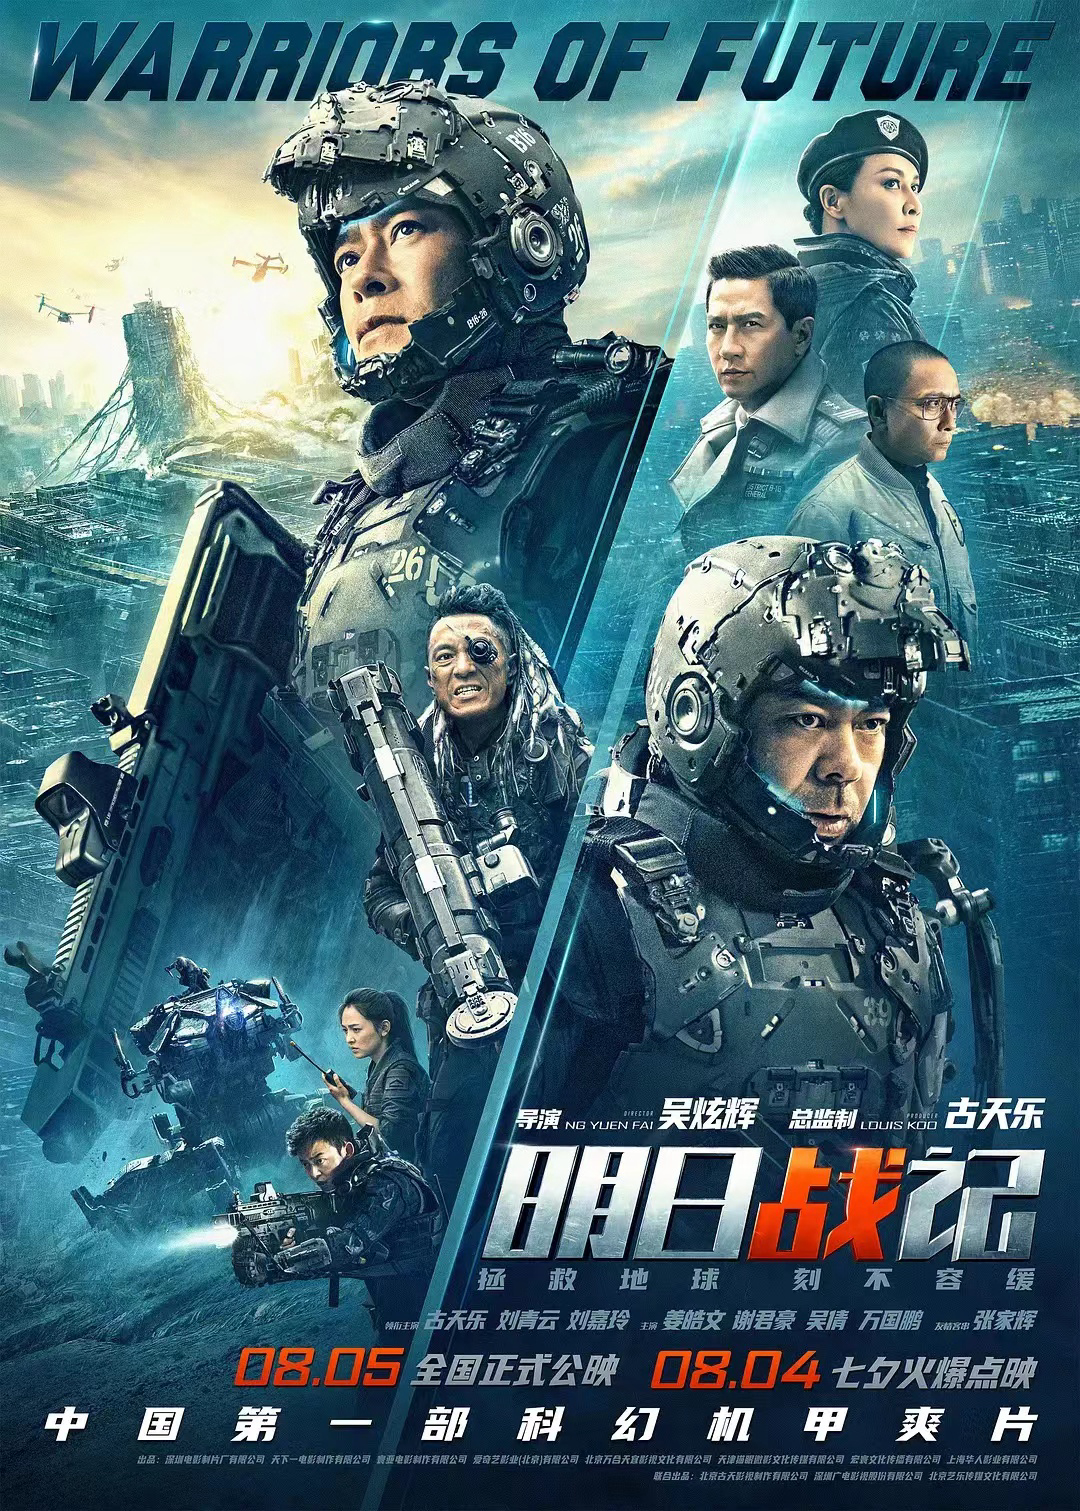 Poster Phim Minh nhật chiến ký (Warriors of Future)